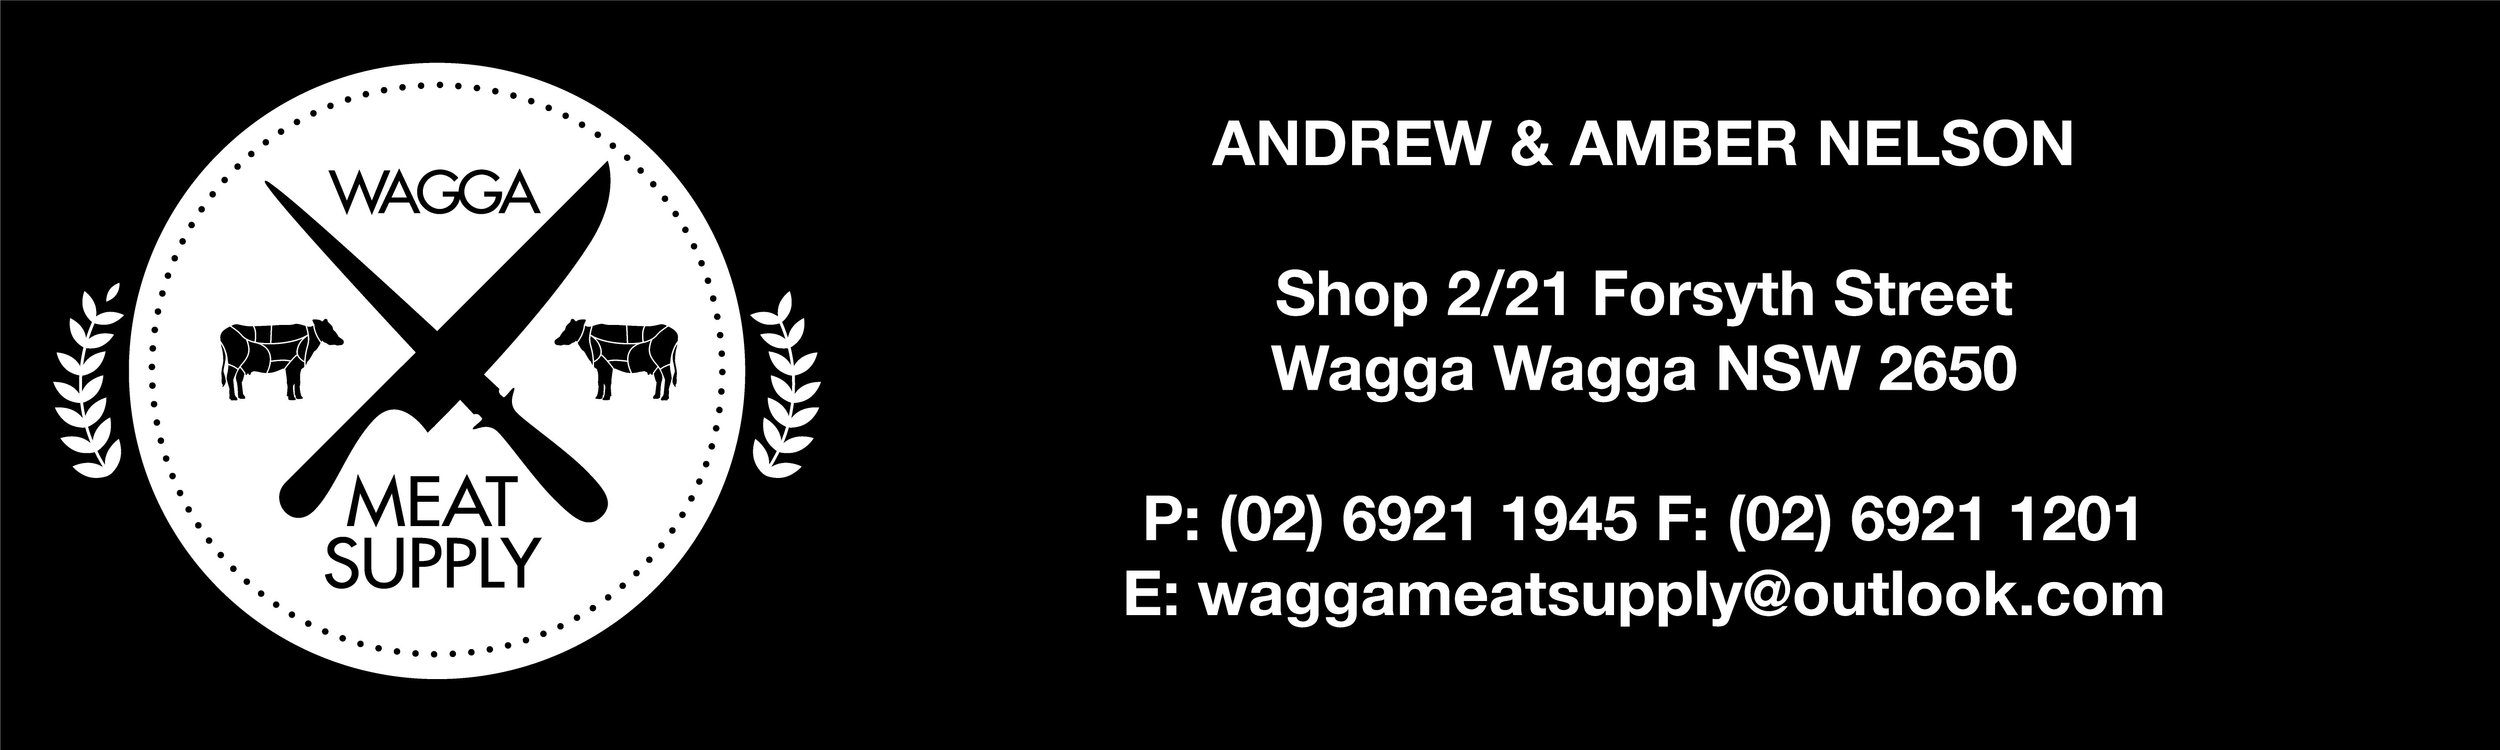 39-Wagga Meat Supply.jpg